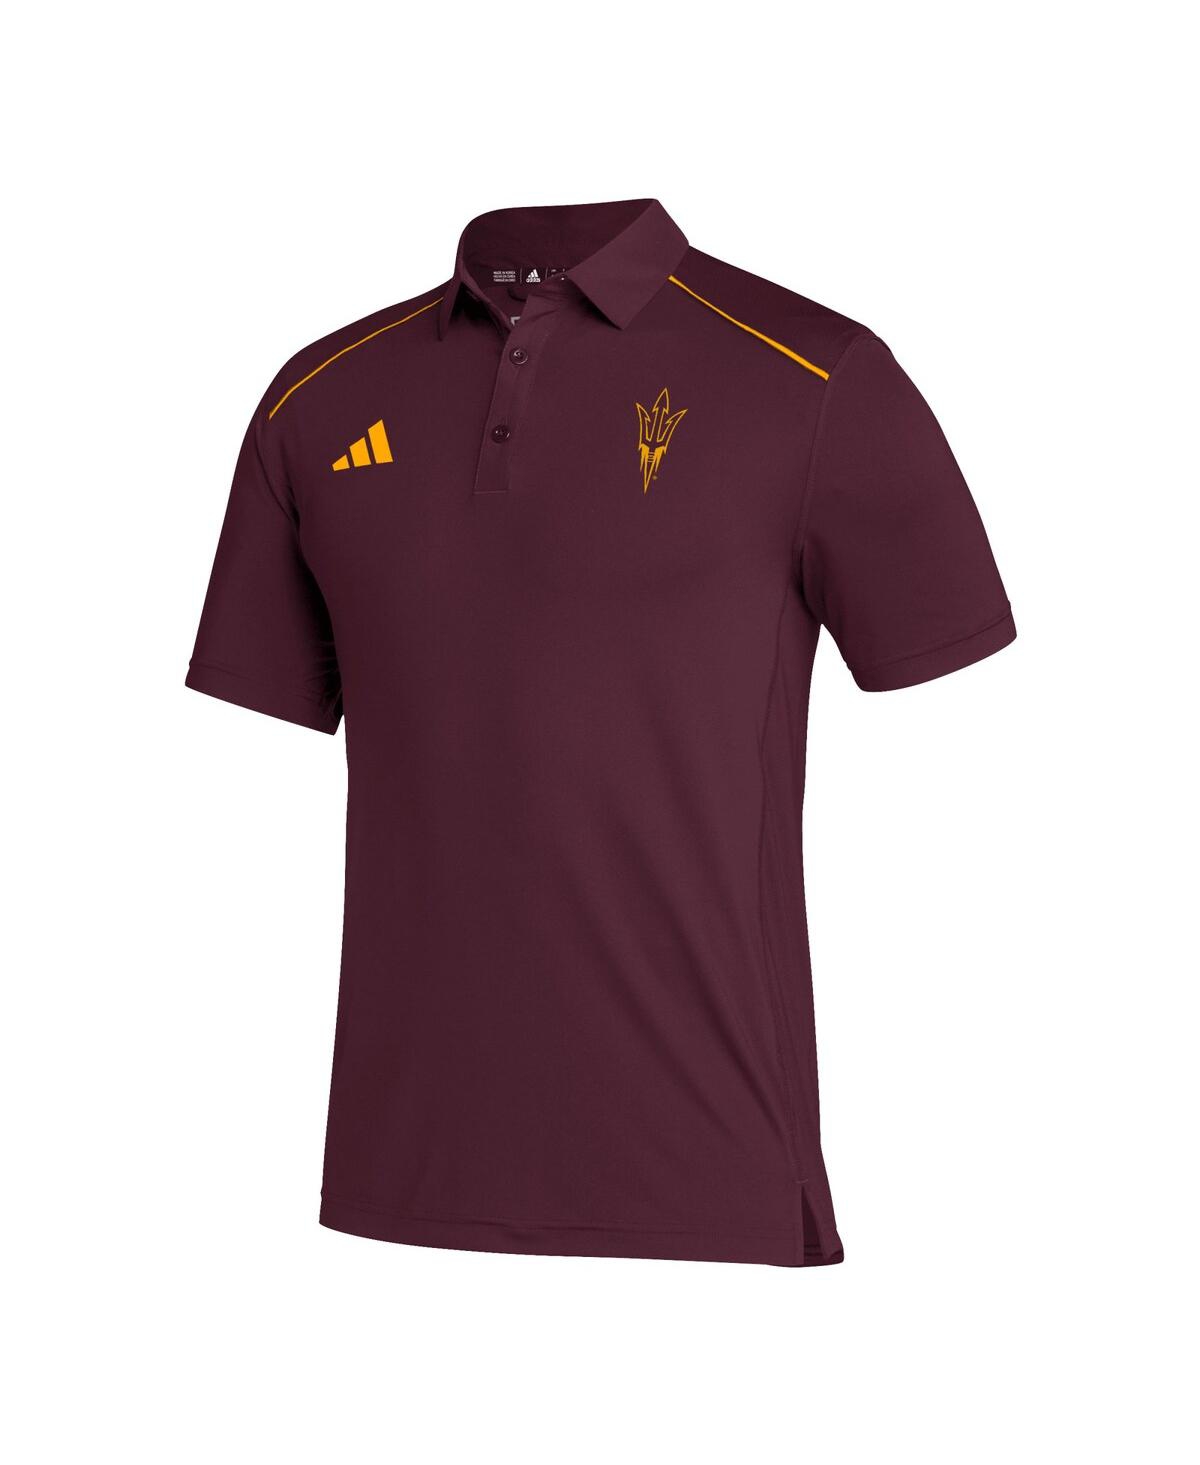 Shop Adidas Originals Men's Adidas Maroon Arizona State Sun Devils Coaches Aeroready Polo Shirt